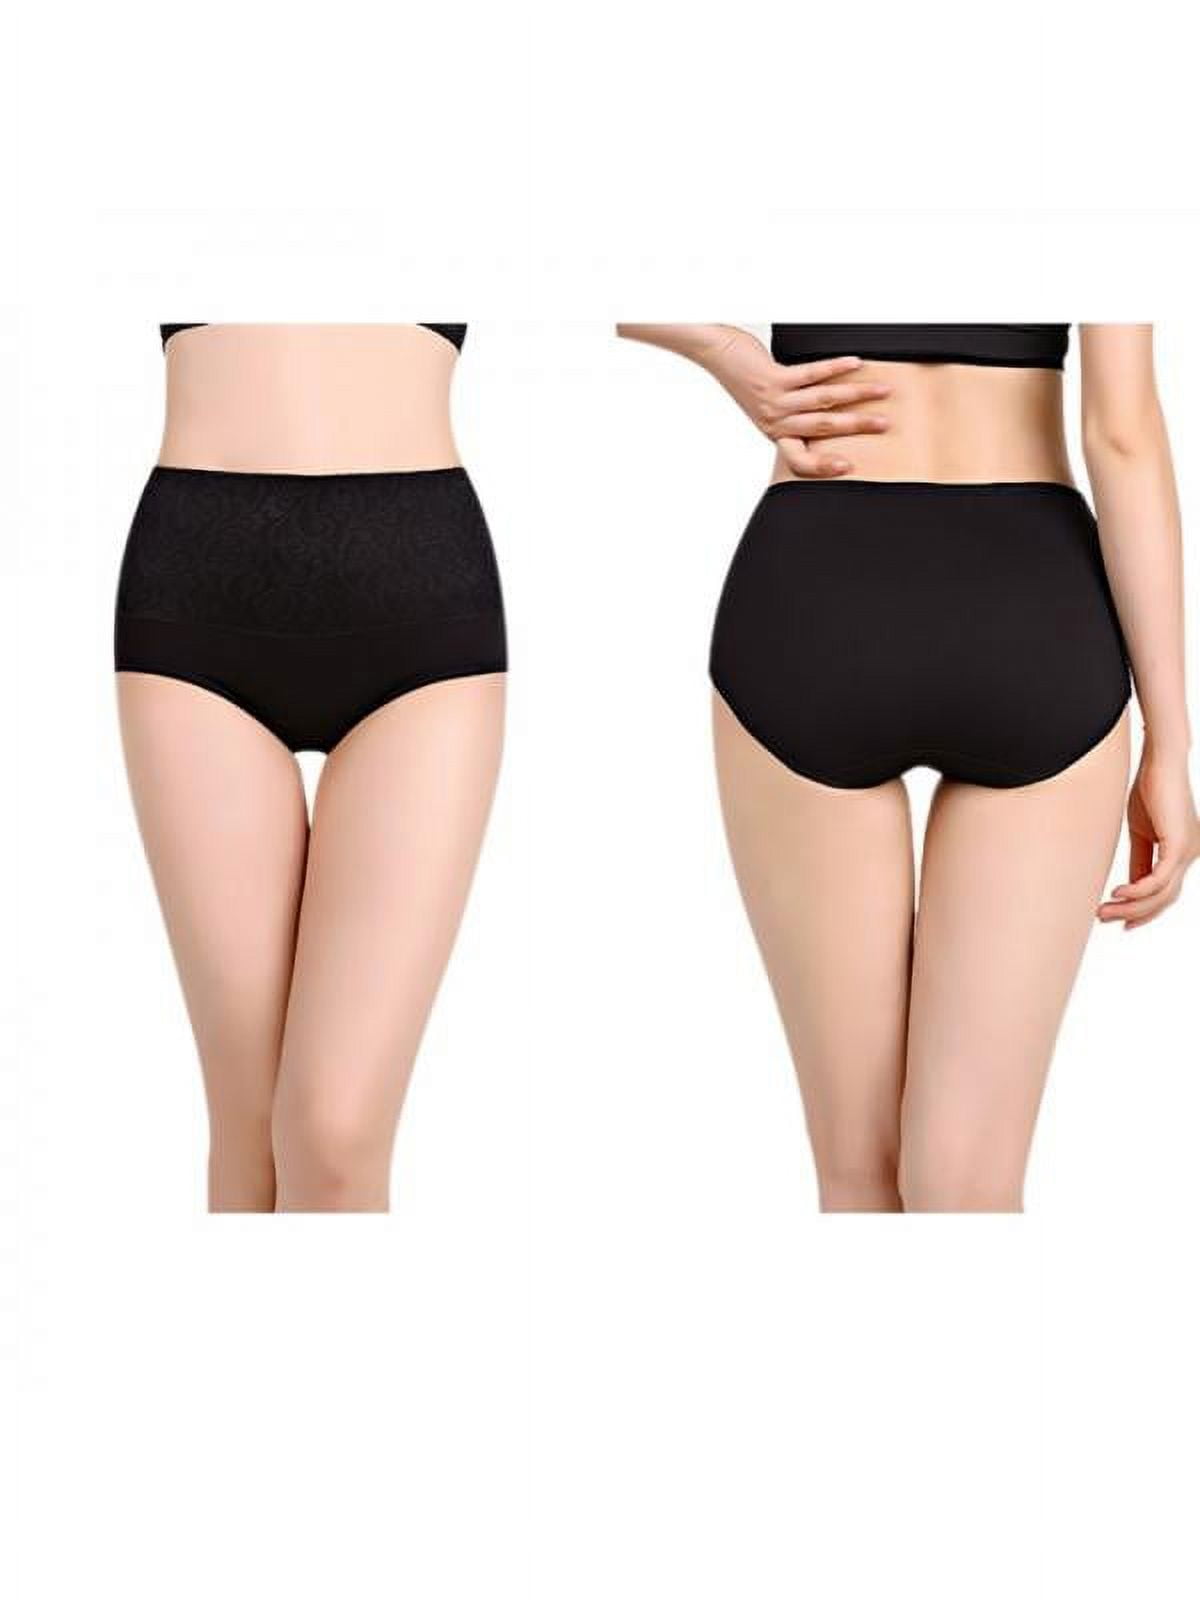 Women's Underwear Leak Proof Menstrual Underwear Cotton Overnight Panties 5  Pcs